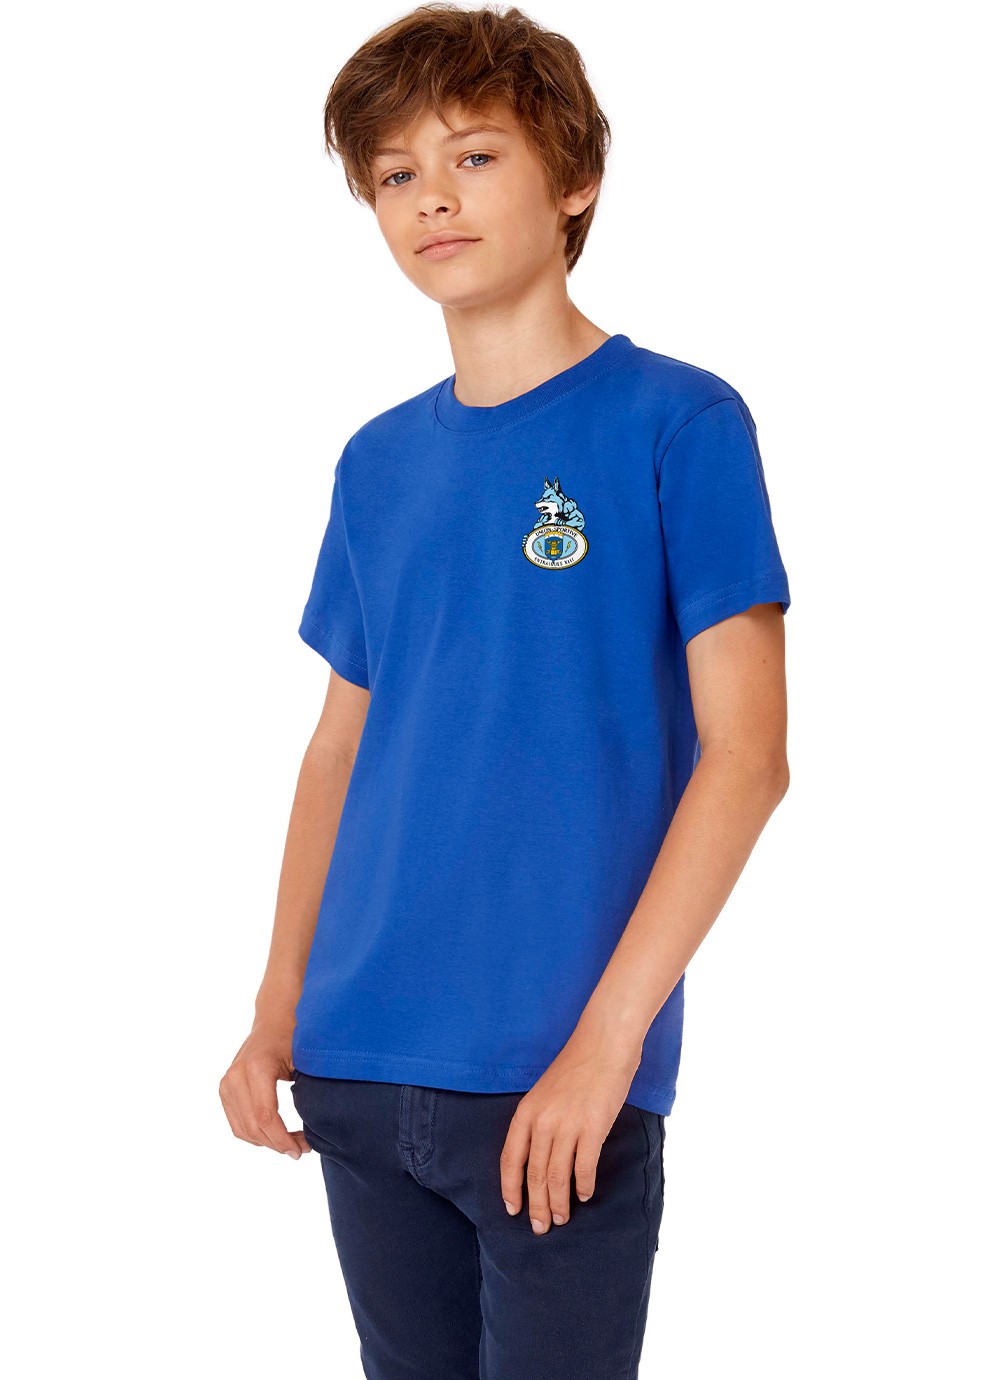 T-shirt enfant Carl Entraigues XIII bleu roi